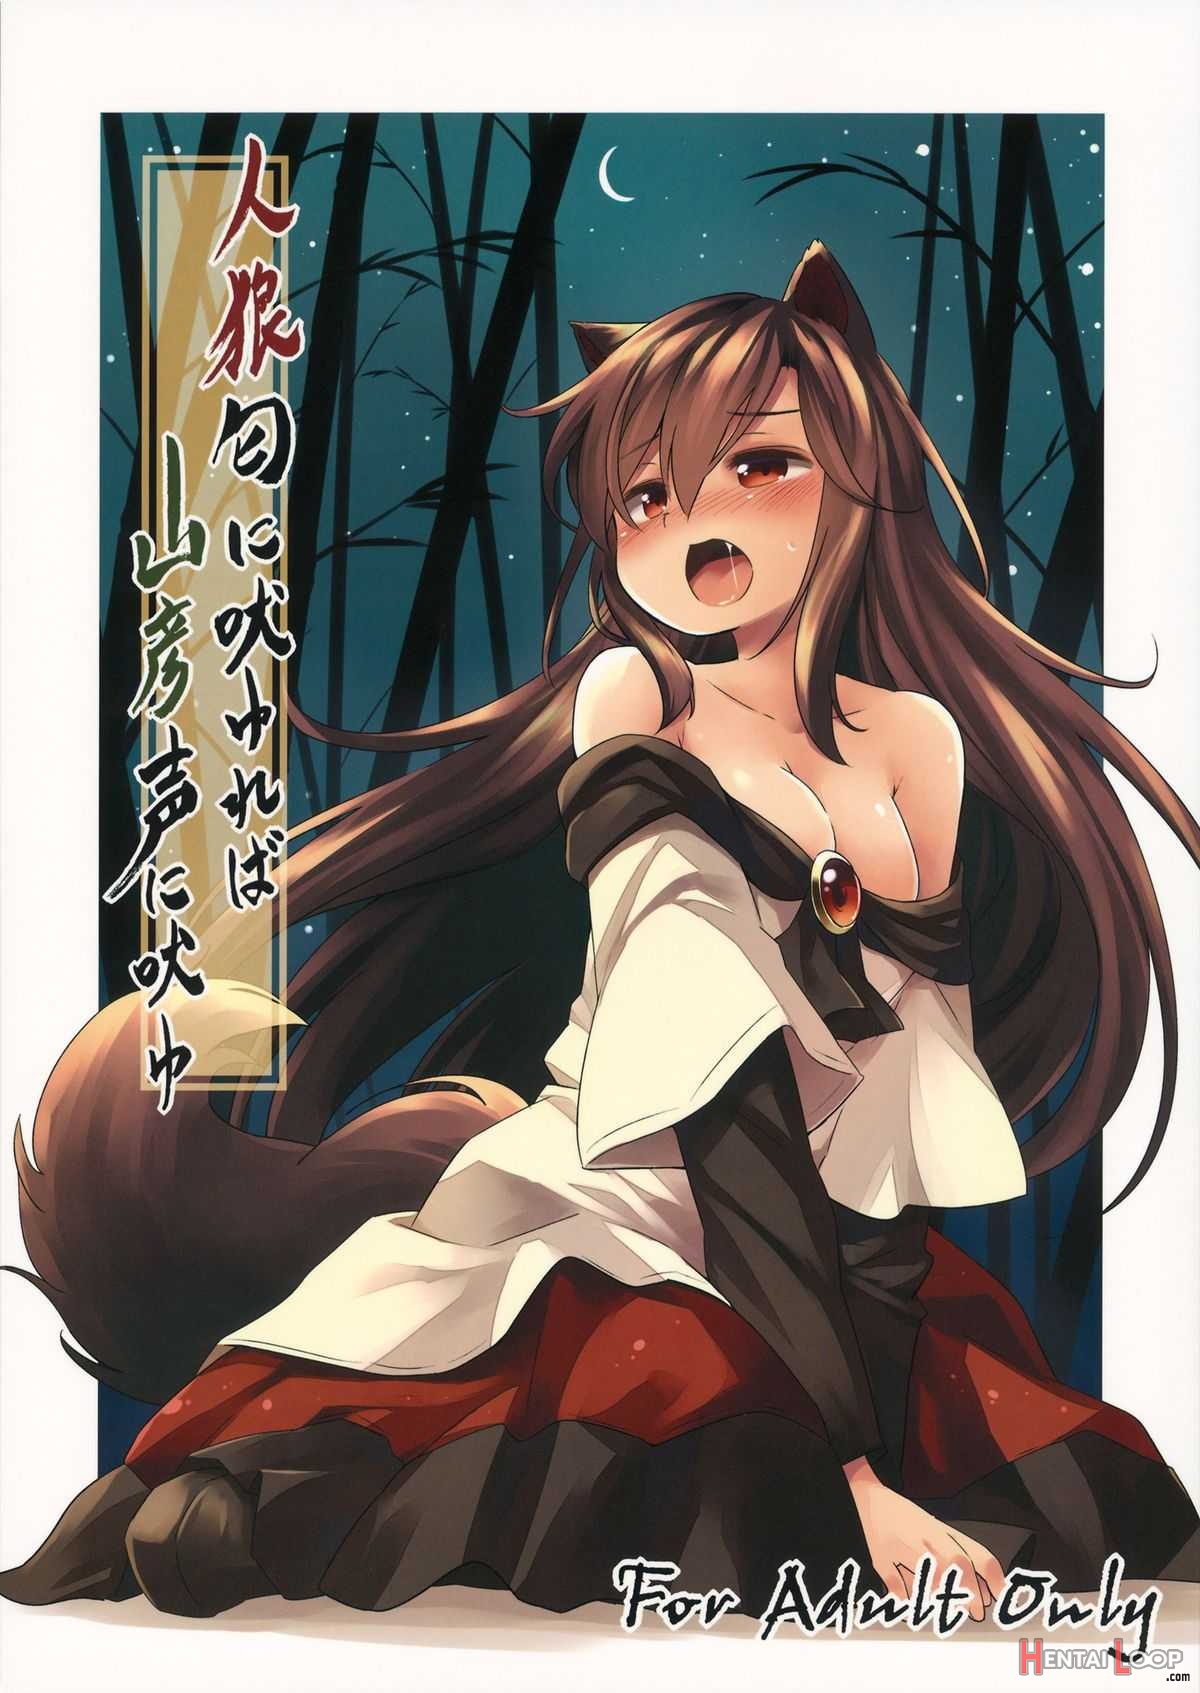 When The Werewolf Barks, The Yamabiko Echos page 1